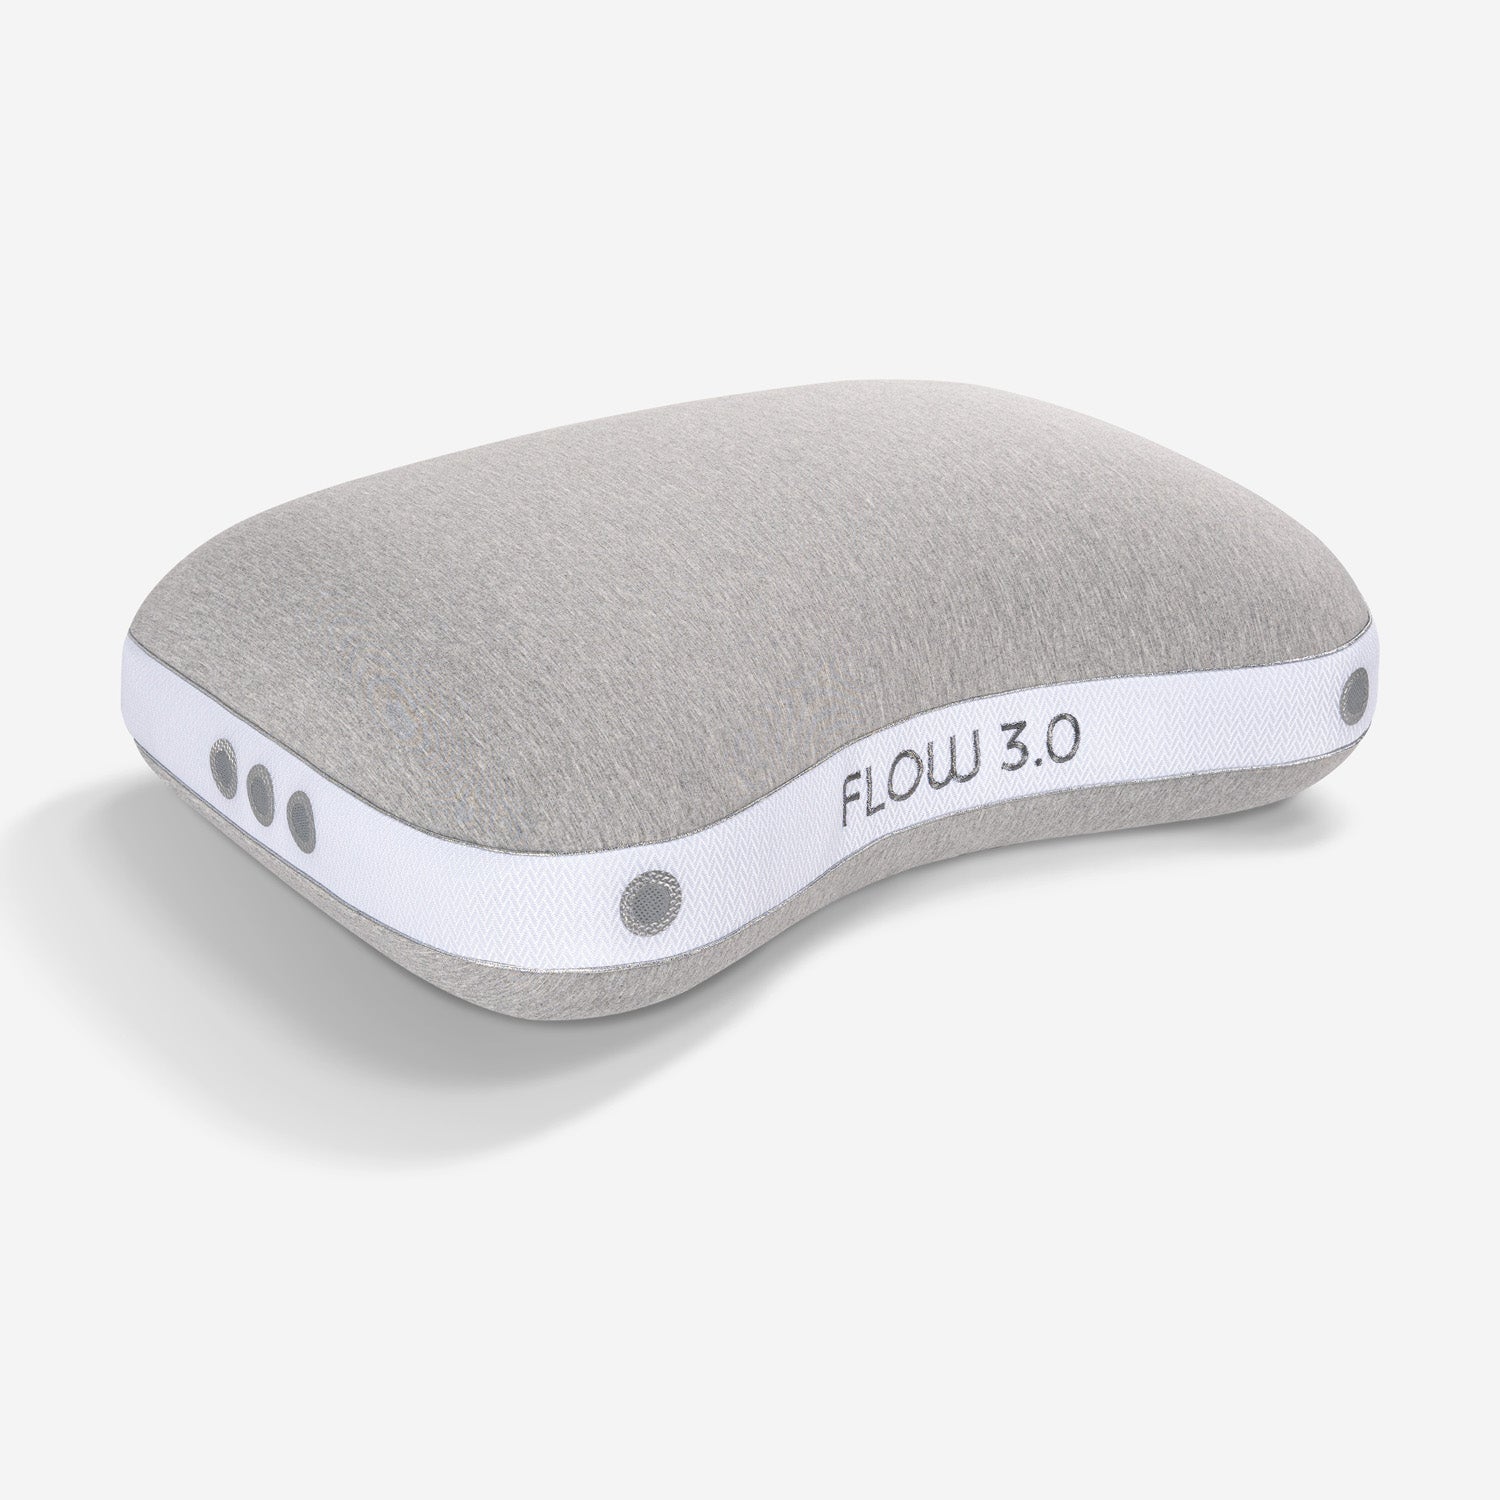 Bedgear Flow Cuddle 3.0 Pillow